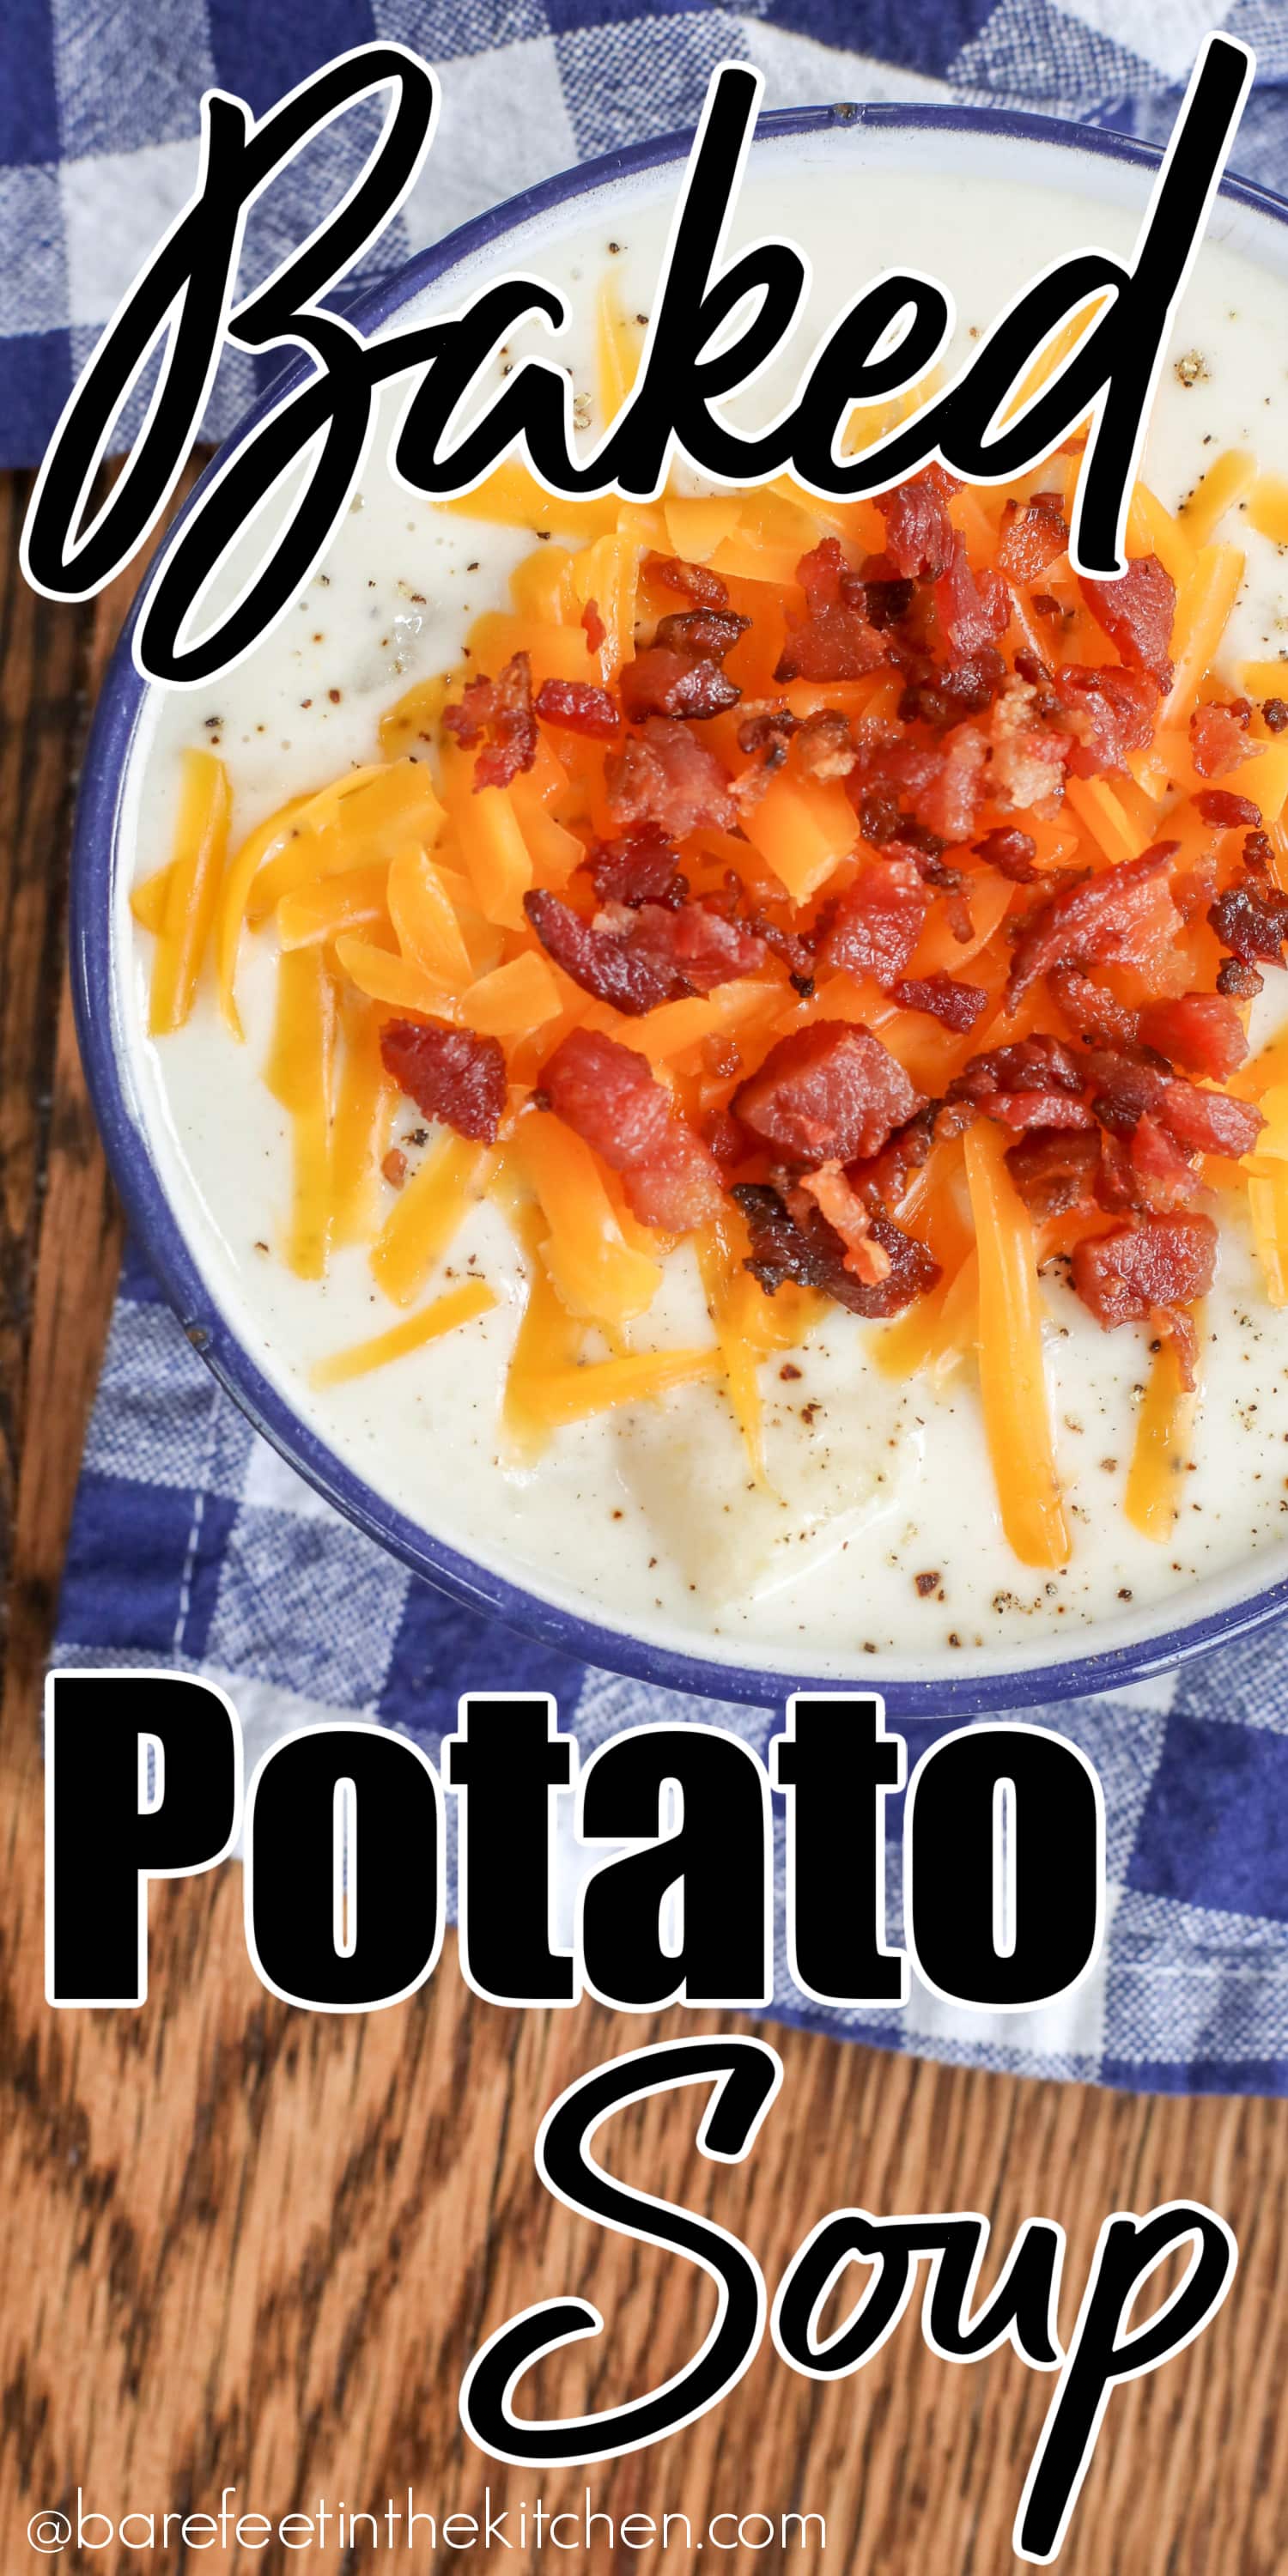 https://barefeetinthekitchen.com/wp-content/uploads/2015/09/Baked-Potato-Soup-1-pin.jpg